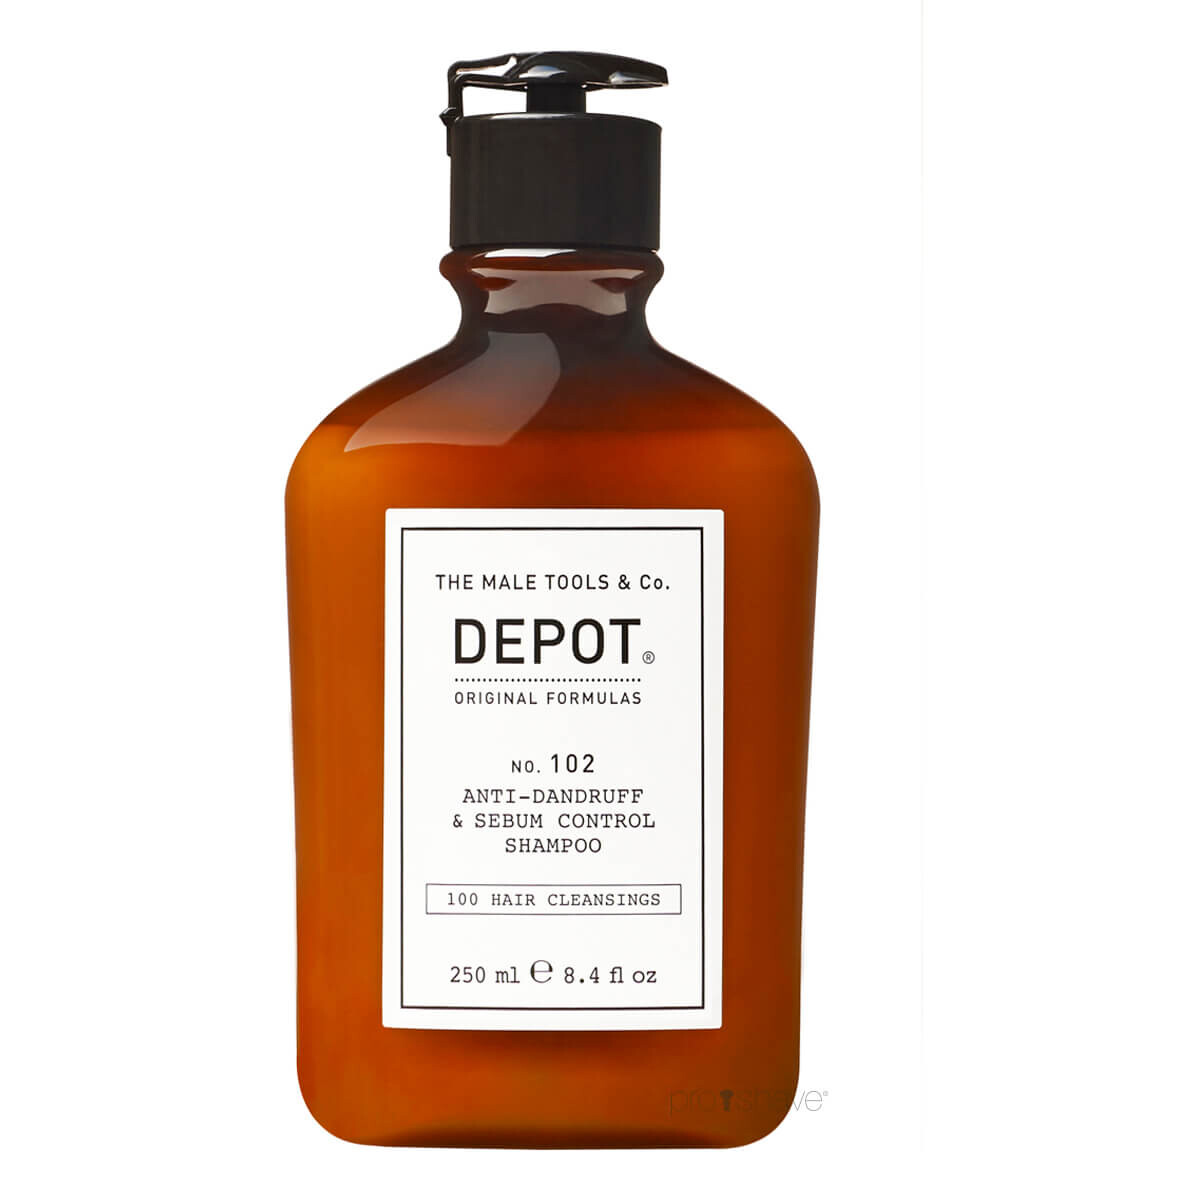 Billede af Depot Anti-Dandruff & Sebum Control Shampoo, No. 102, 250 ml.